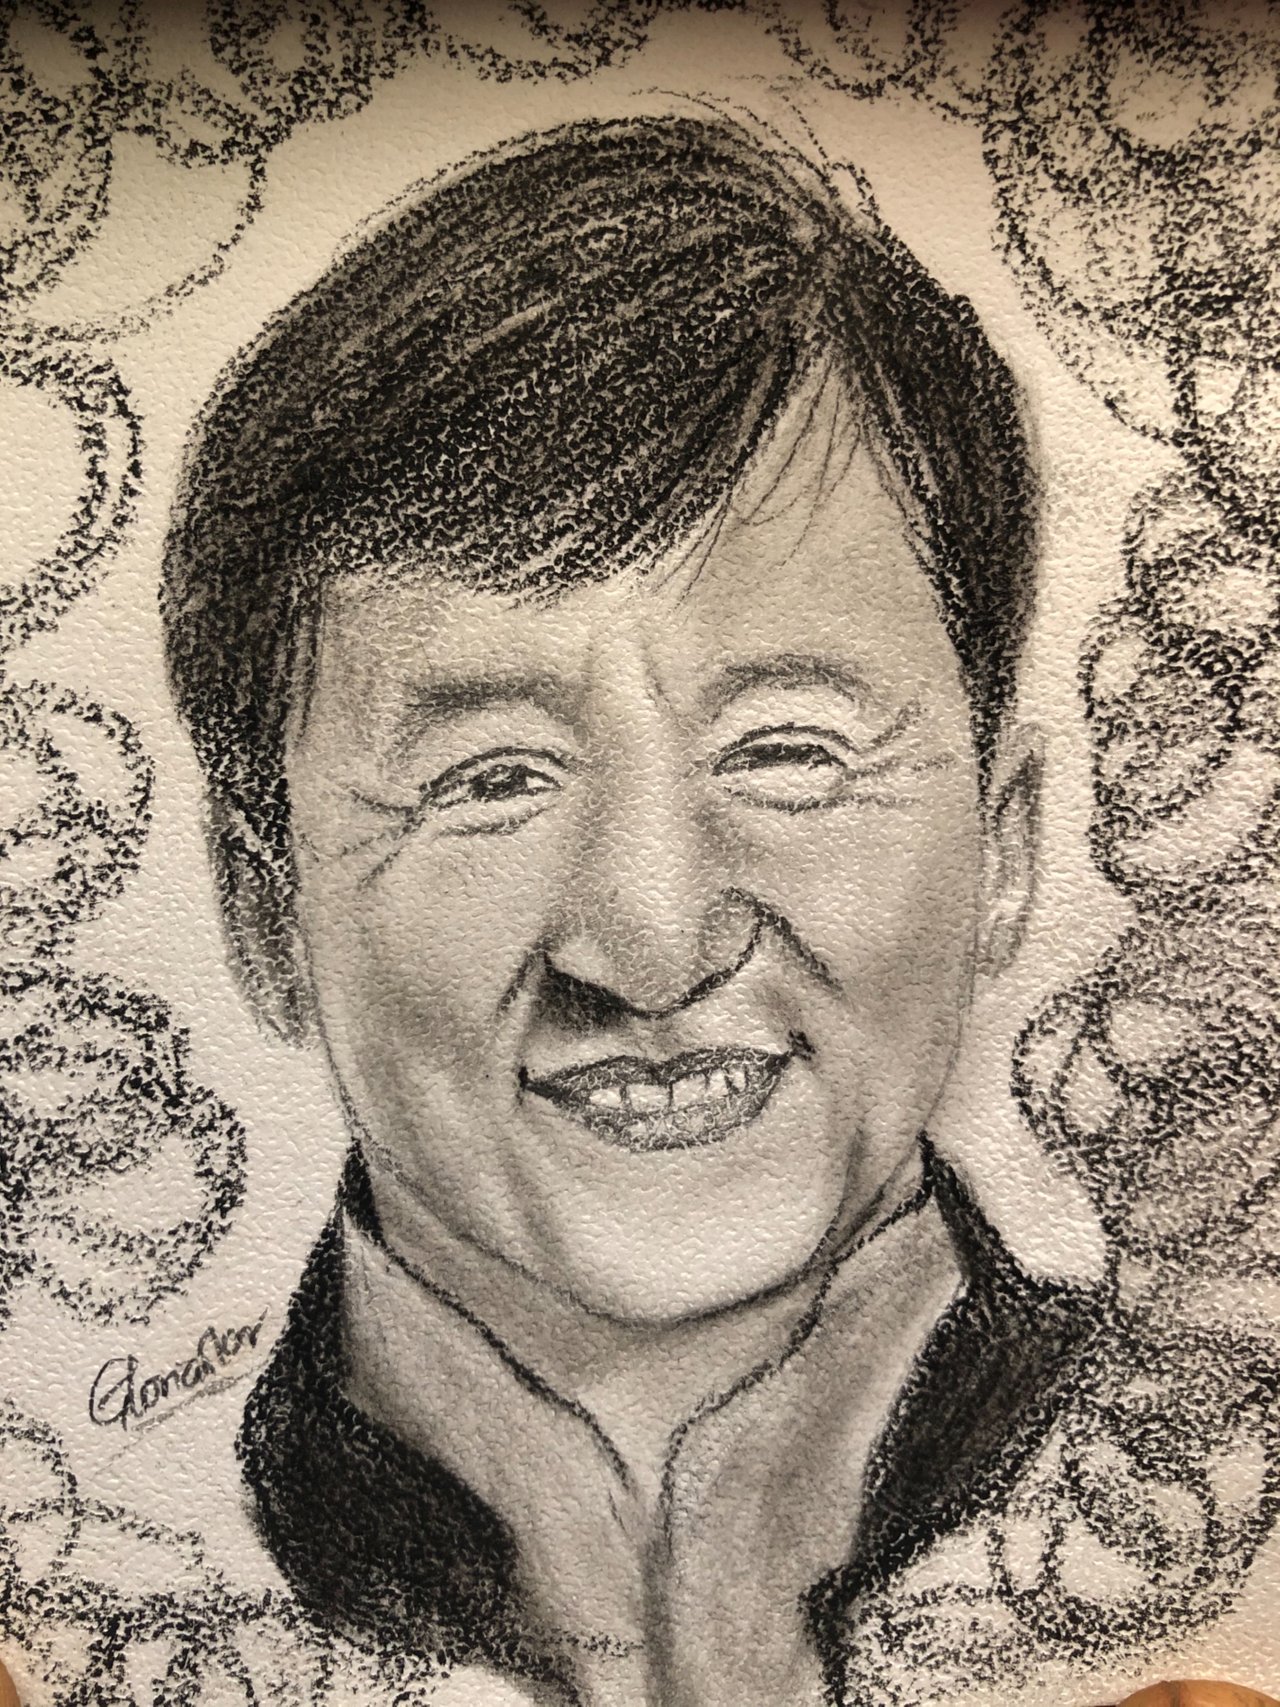 Sketch I did of Jackie Chan for his birthday  rJackieChan